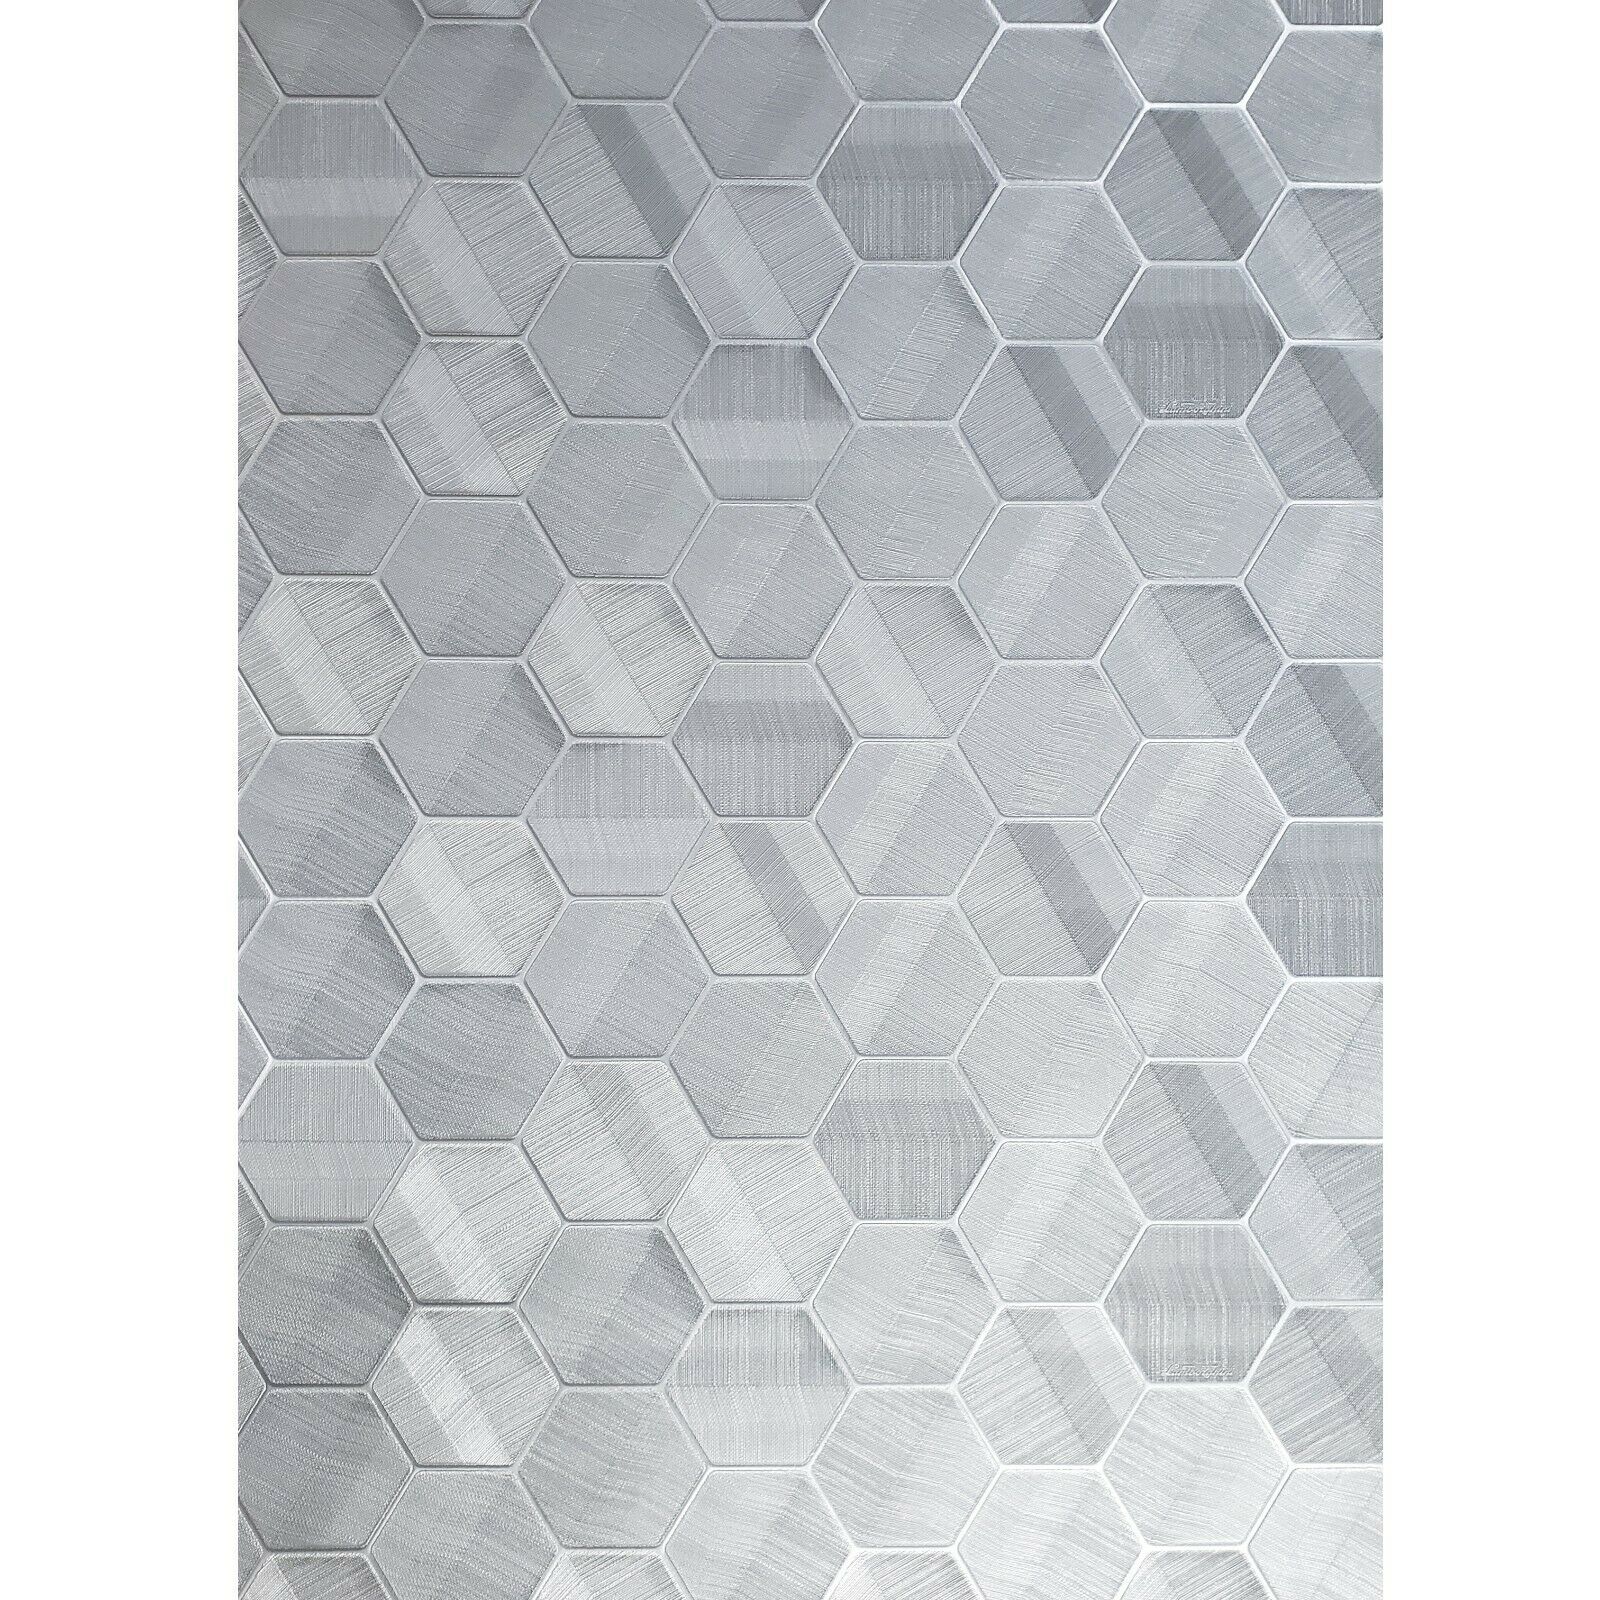 Z44810 Lamborghini Hexagon gray silver metallic fabric textured 